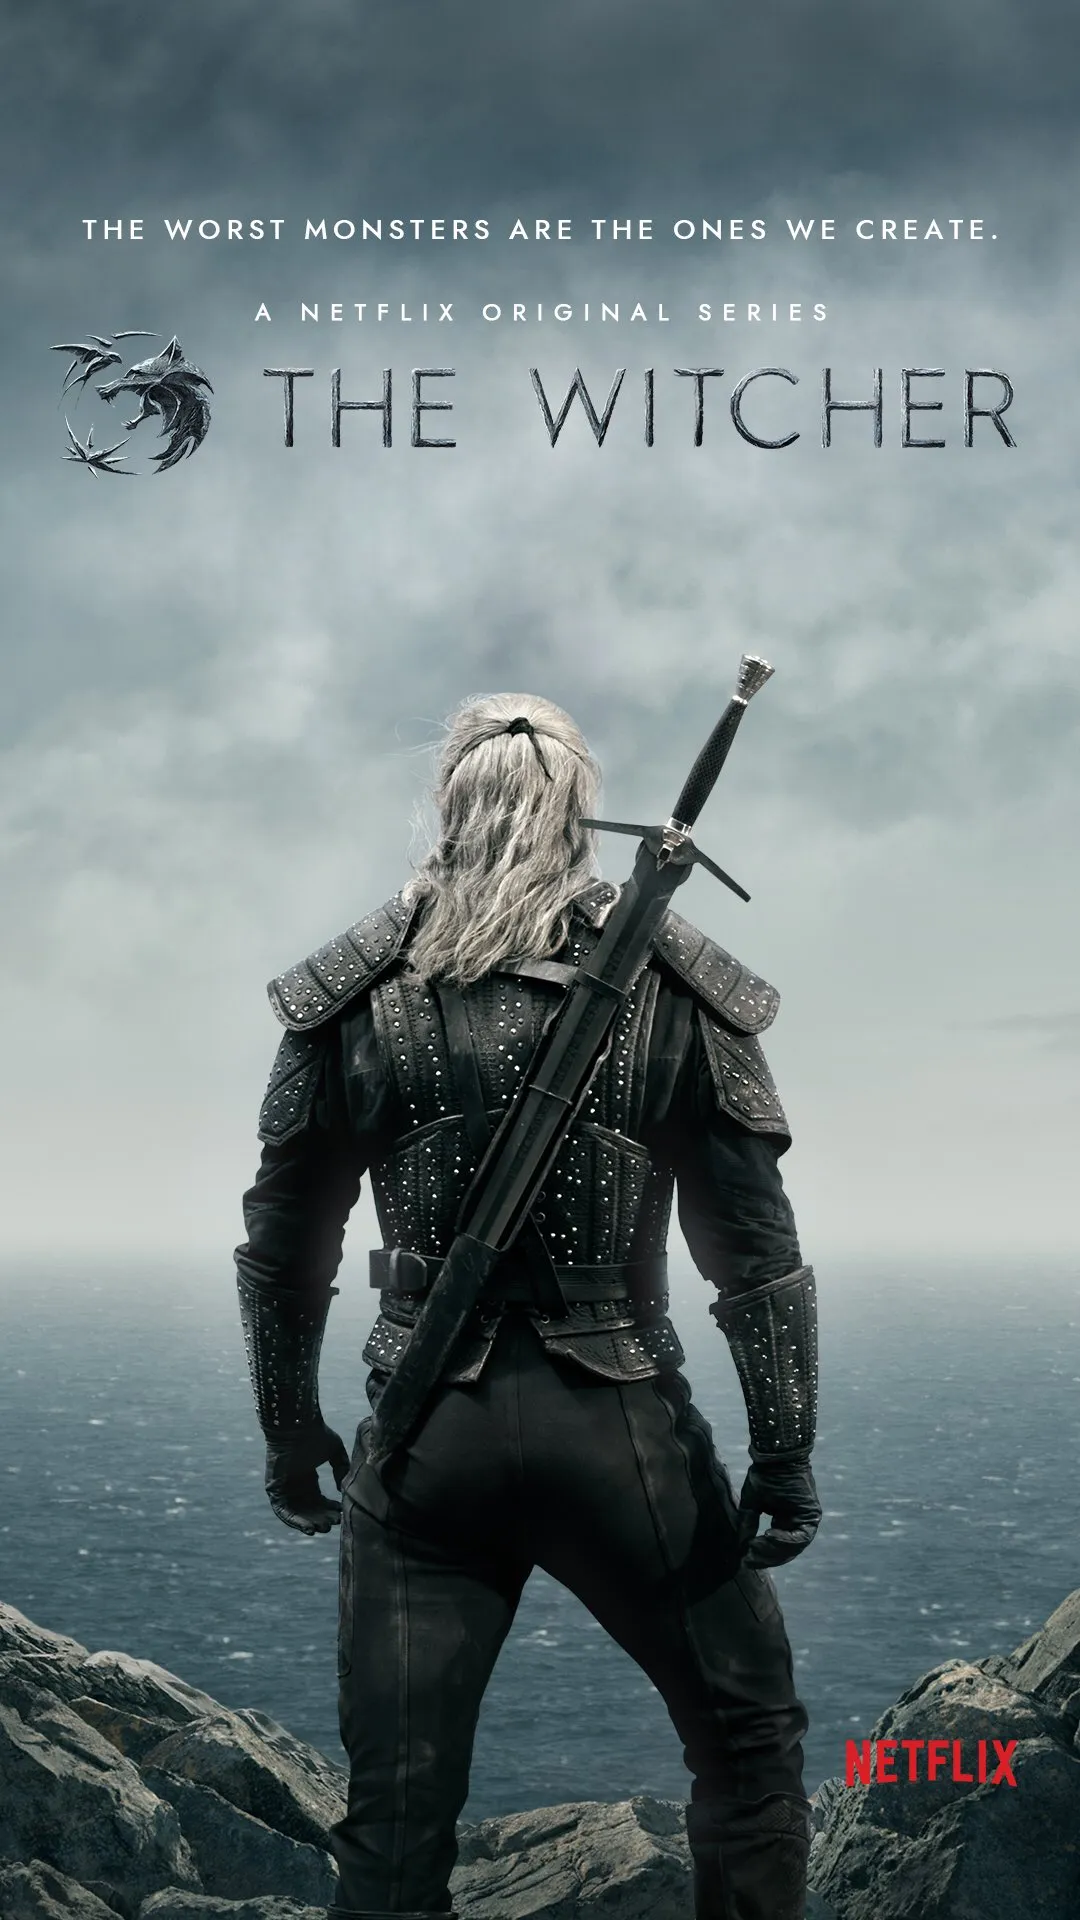 Netflix's The Witcher